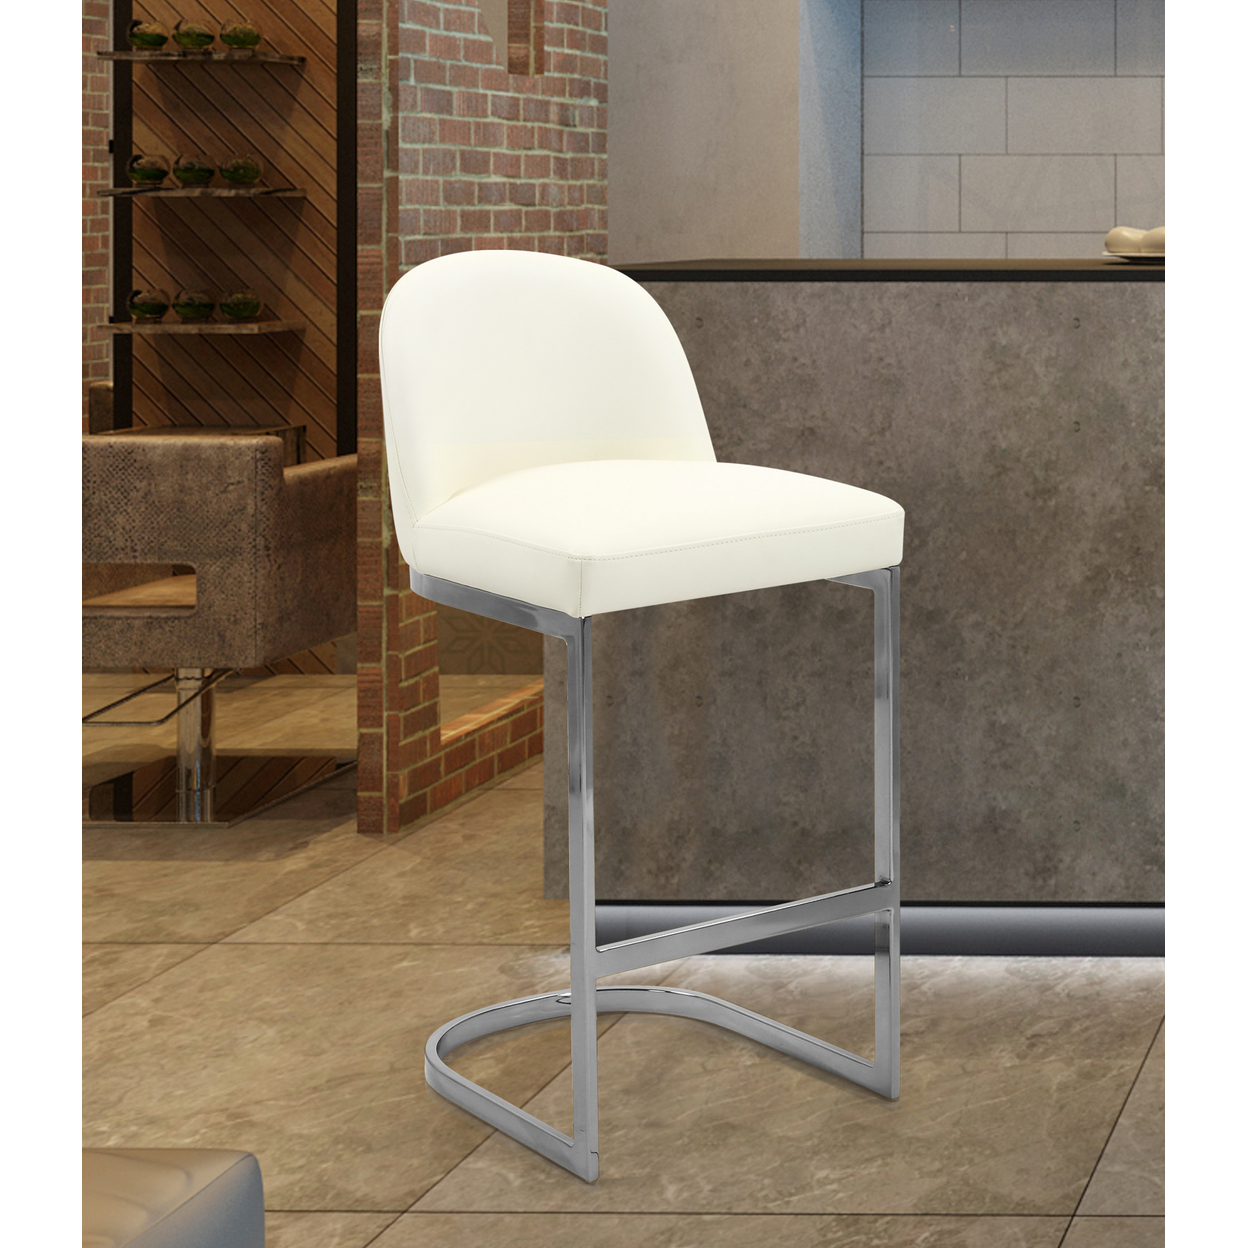 Iconic Home Liana Bar Stool Chair PU Leather Upholstered Armless Design Half-Moon Chrome Plated Solid Metal U-Shaped Base - Cream